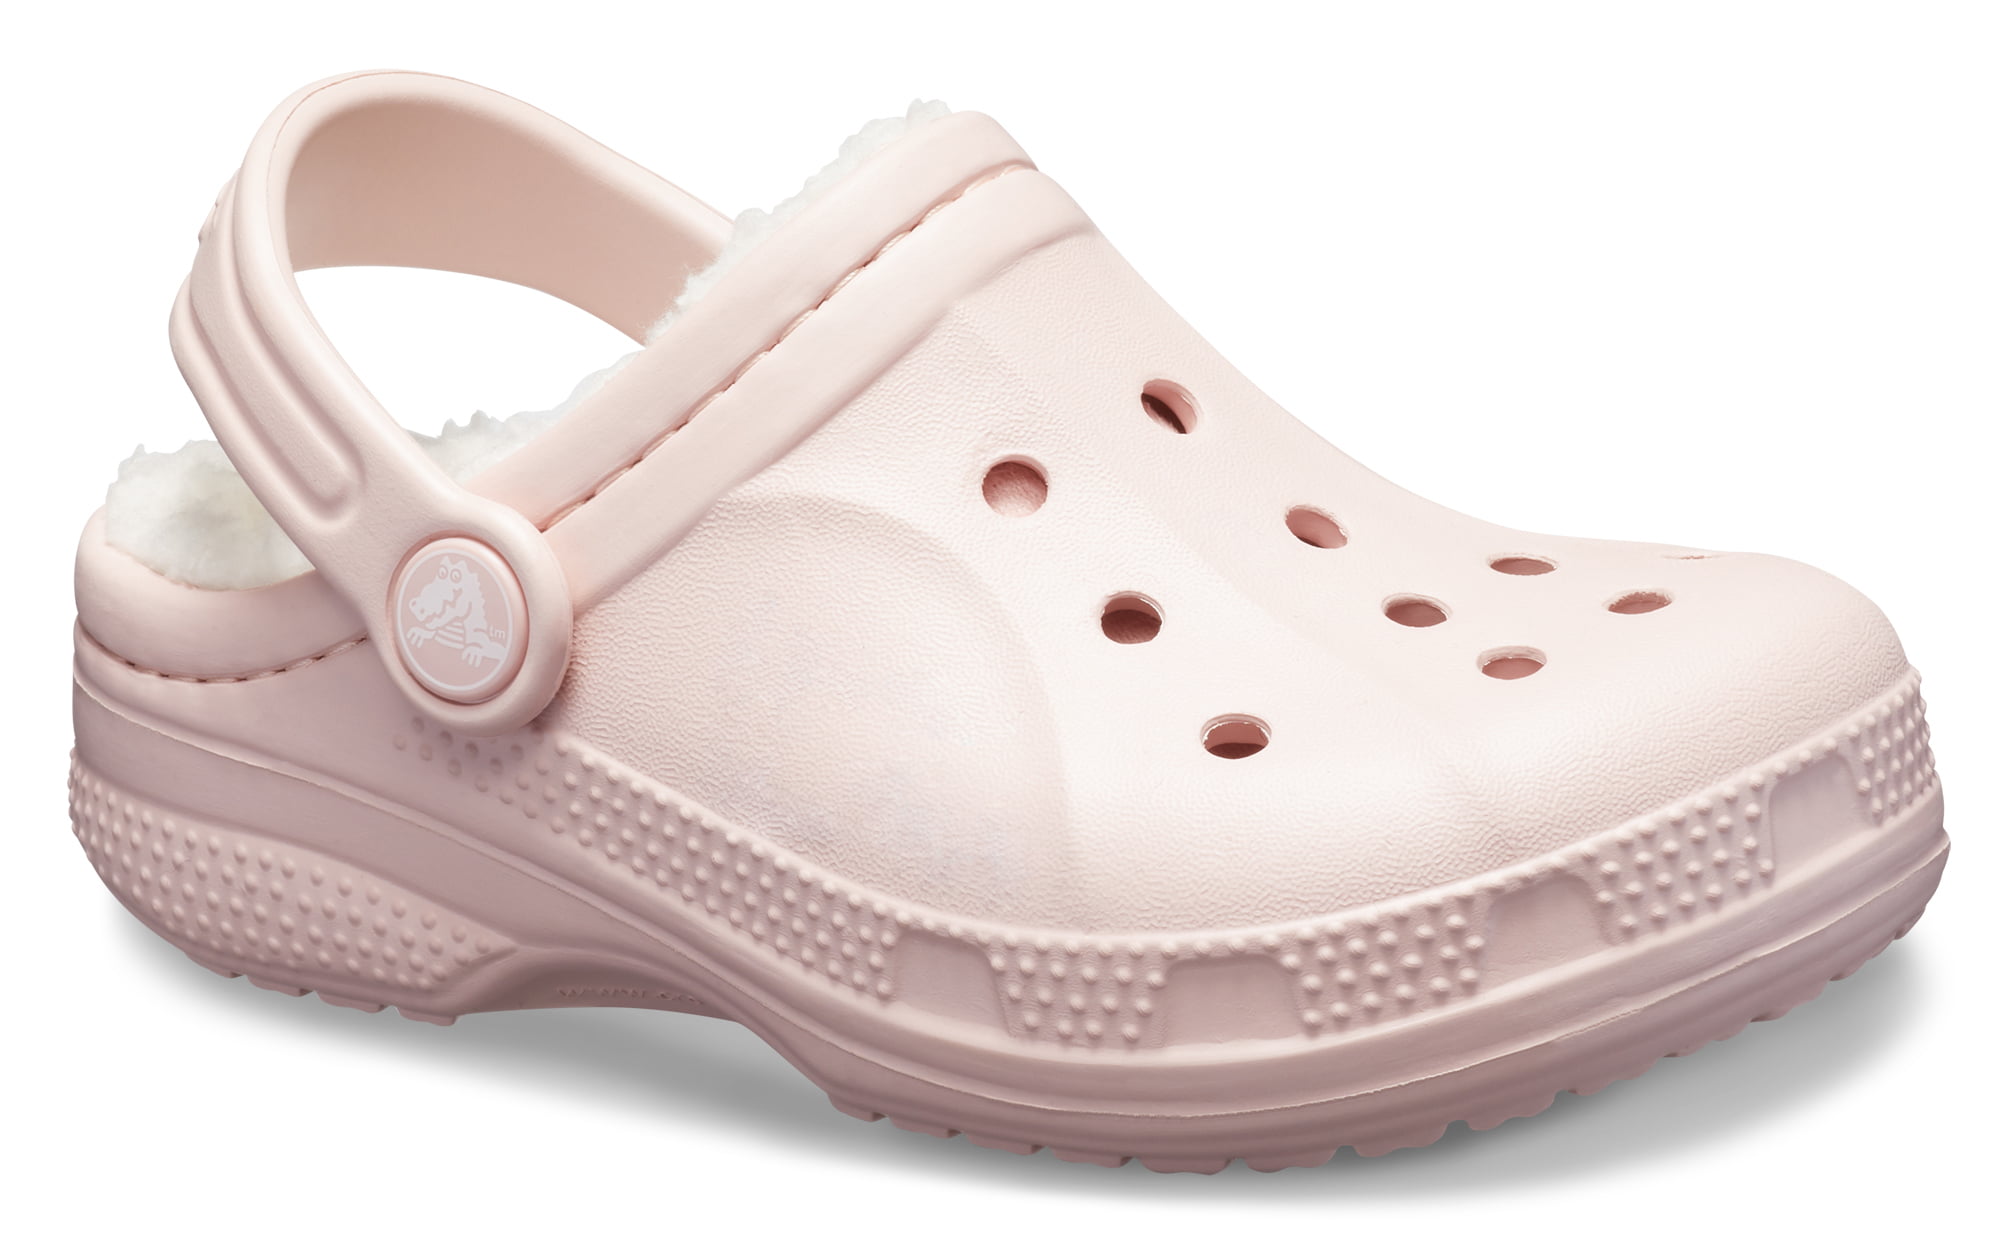 pink crocs walmart